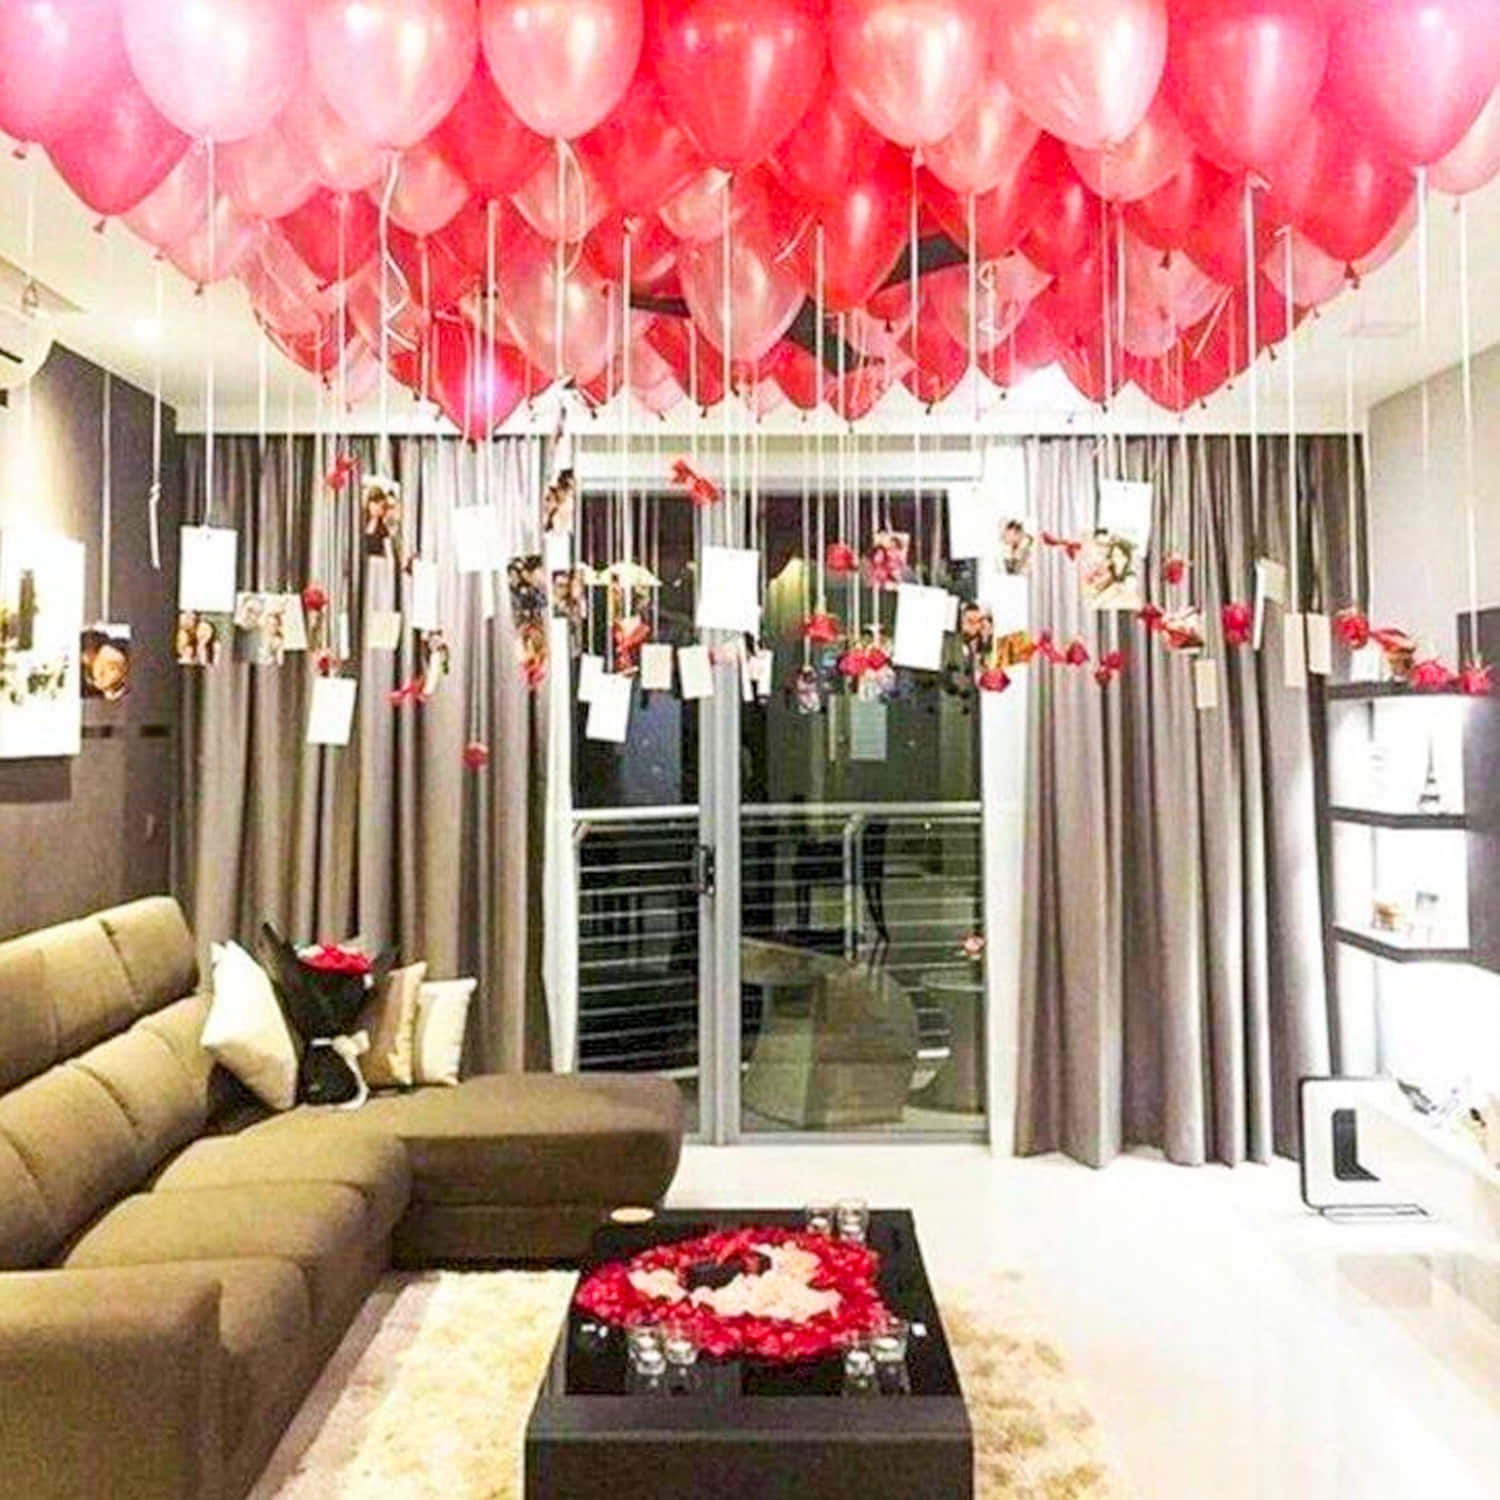 oyo room decoration for birthday | birthday room decoration ideas for  boyfriend | surprise balloons for boyfriend and girlfriend | Noida, Delhi  NCR - YouTube